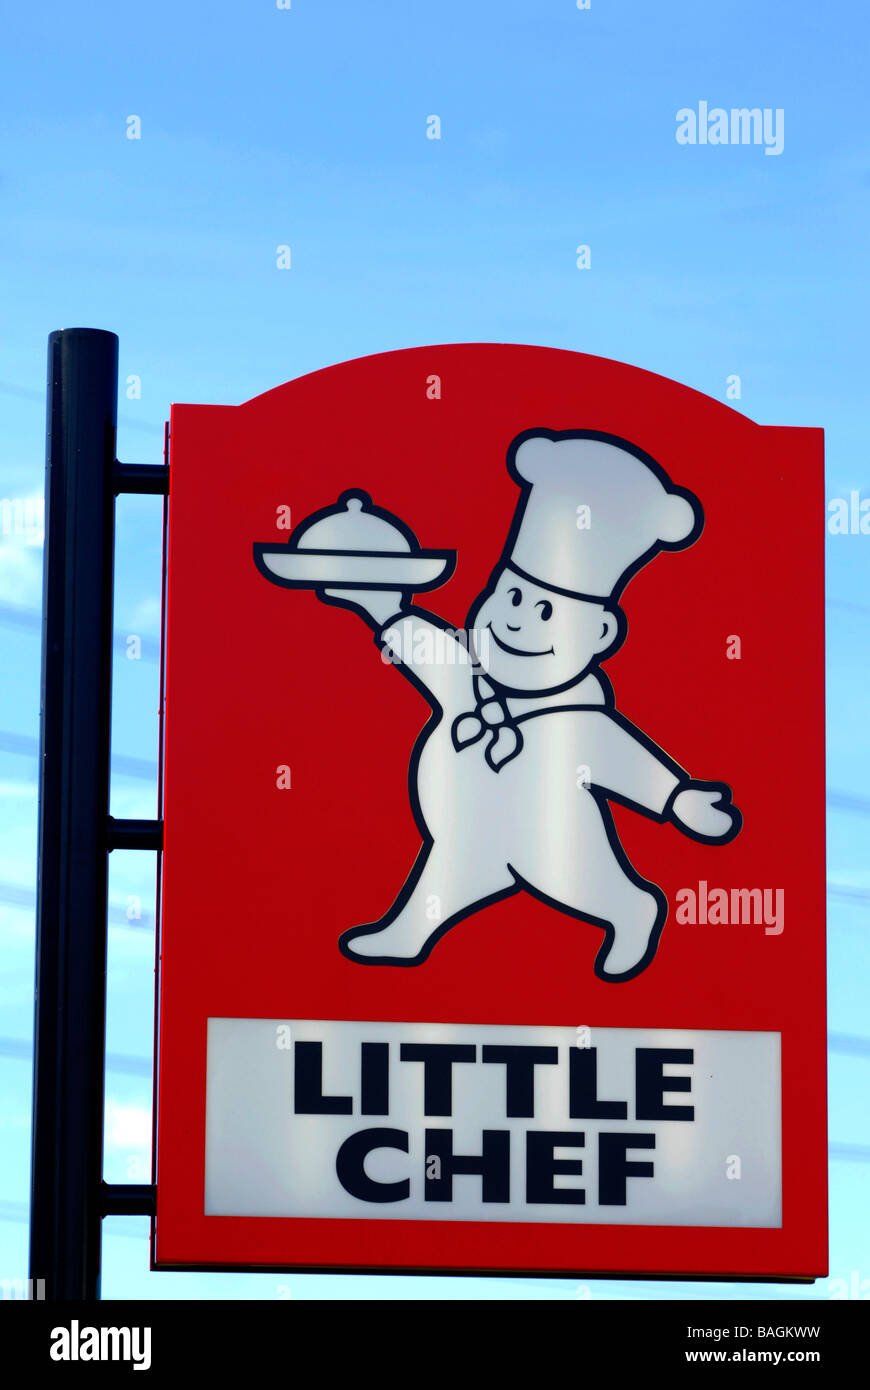 https://c8.alamy.com/comp/BAGKWW/little-chef-restaurant-sign-BAGKWW.jpg